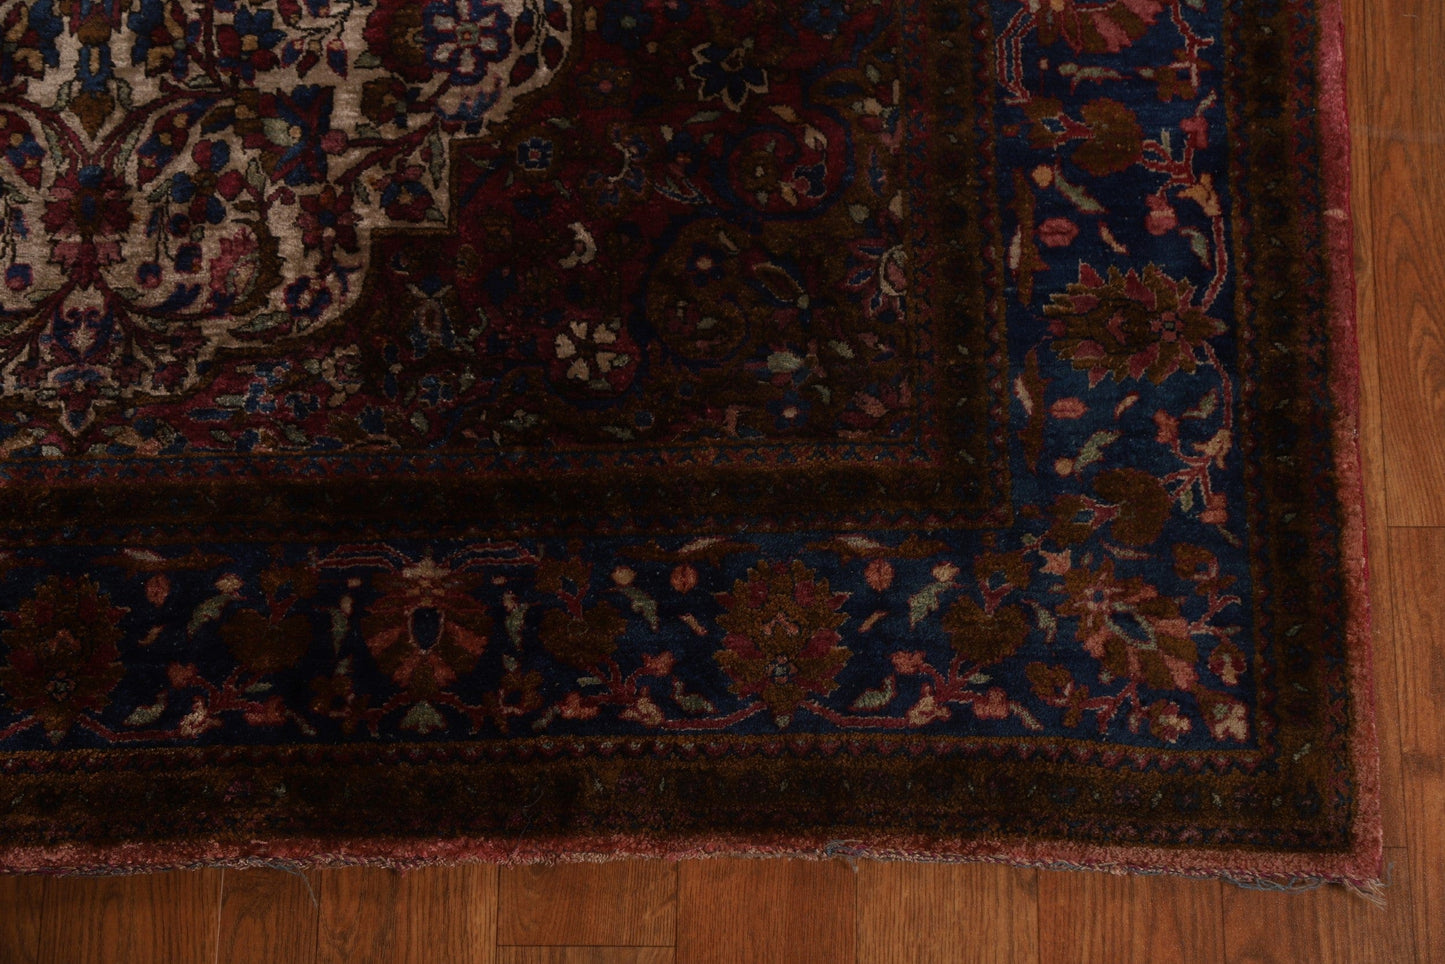 100% Silk Pre-1900 Antique Kashan Mohtasham Persian Rug 4x7